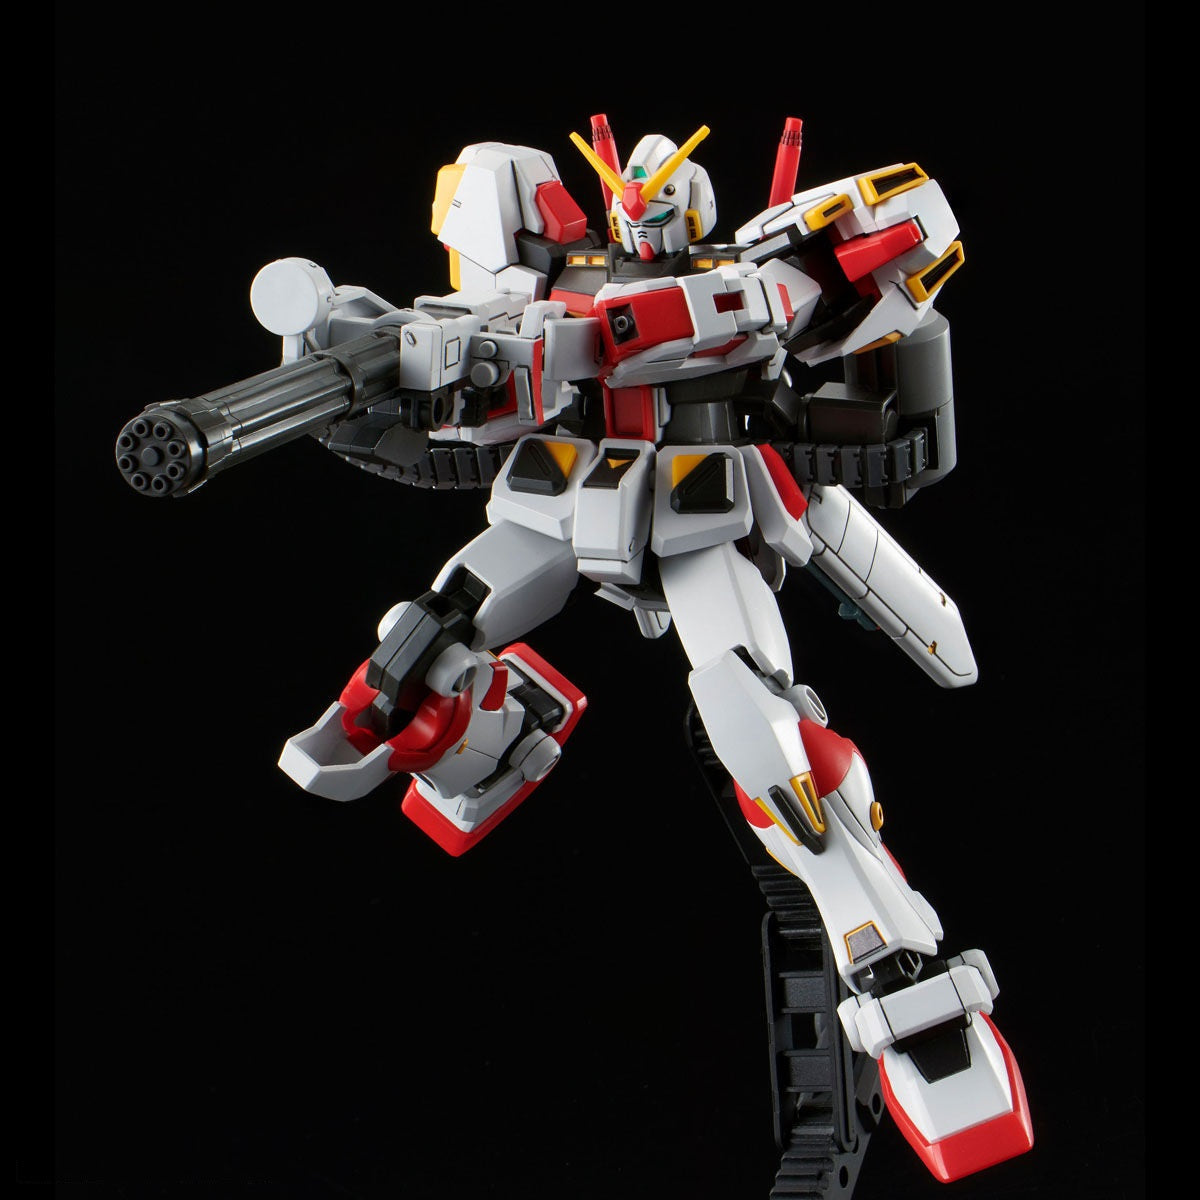 HGUC 1/144 Gundam Unit 05 "G05"